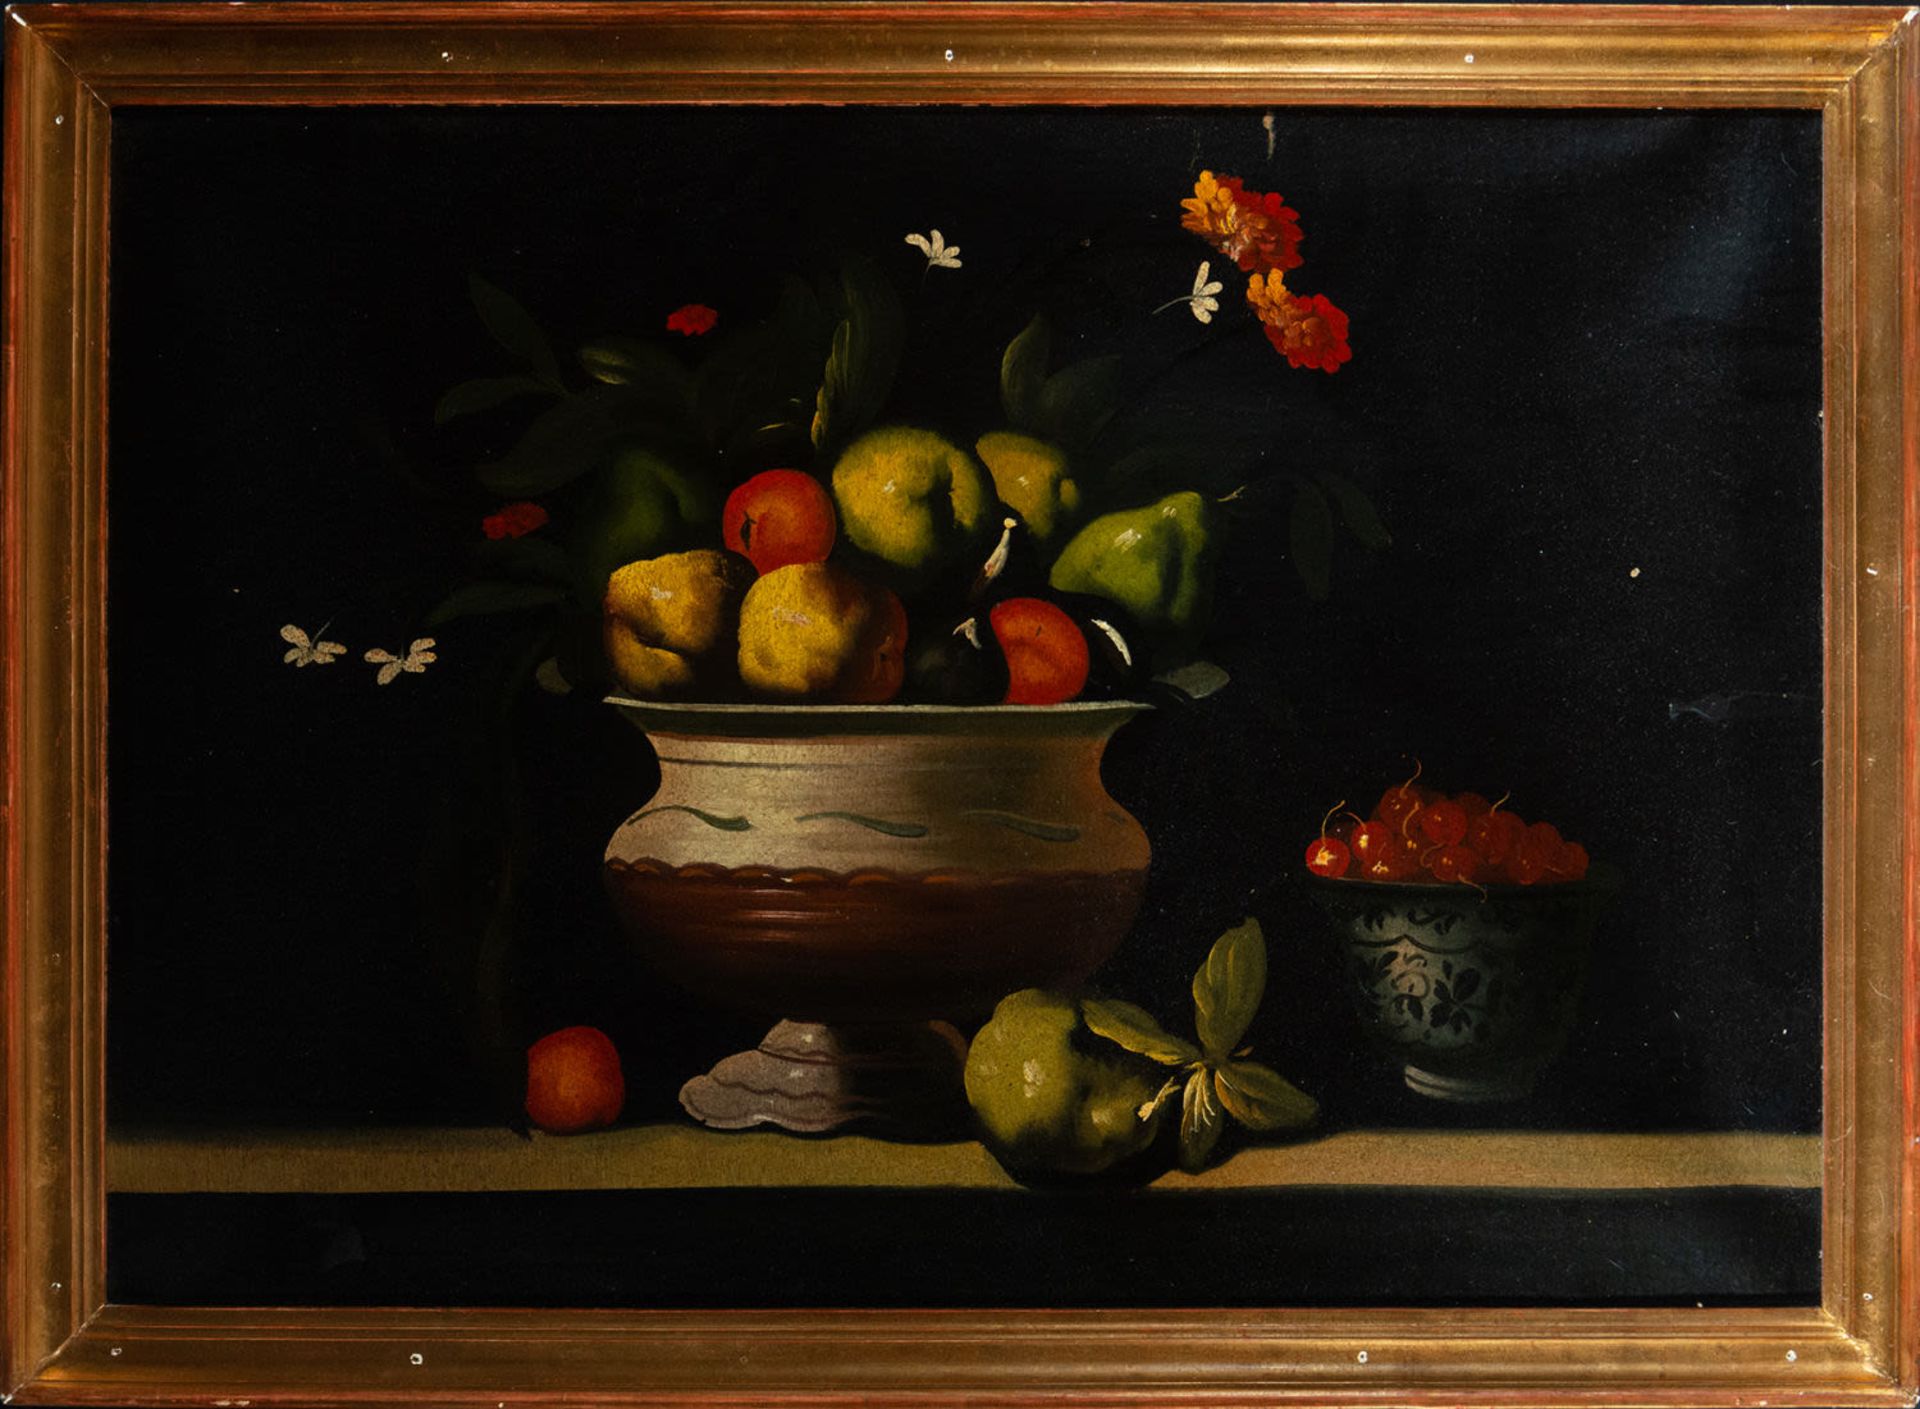 Fruit still life following models from the Majorcan Baroque school, 19th century